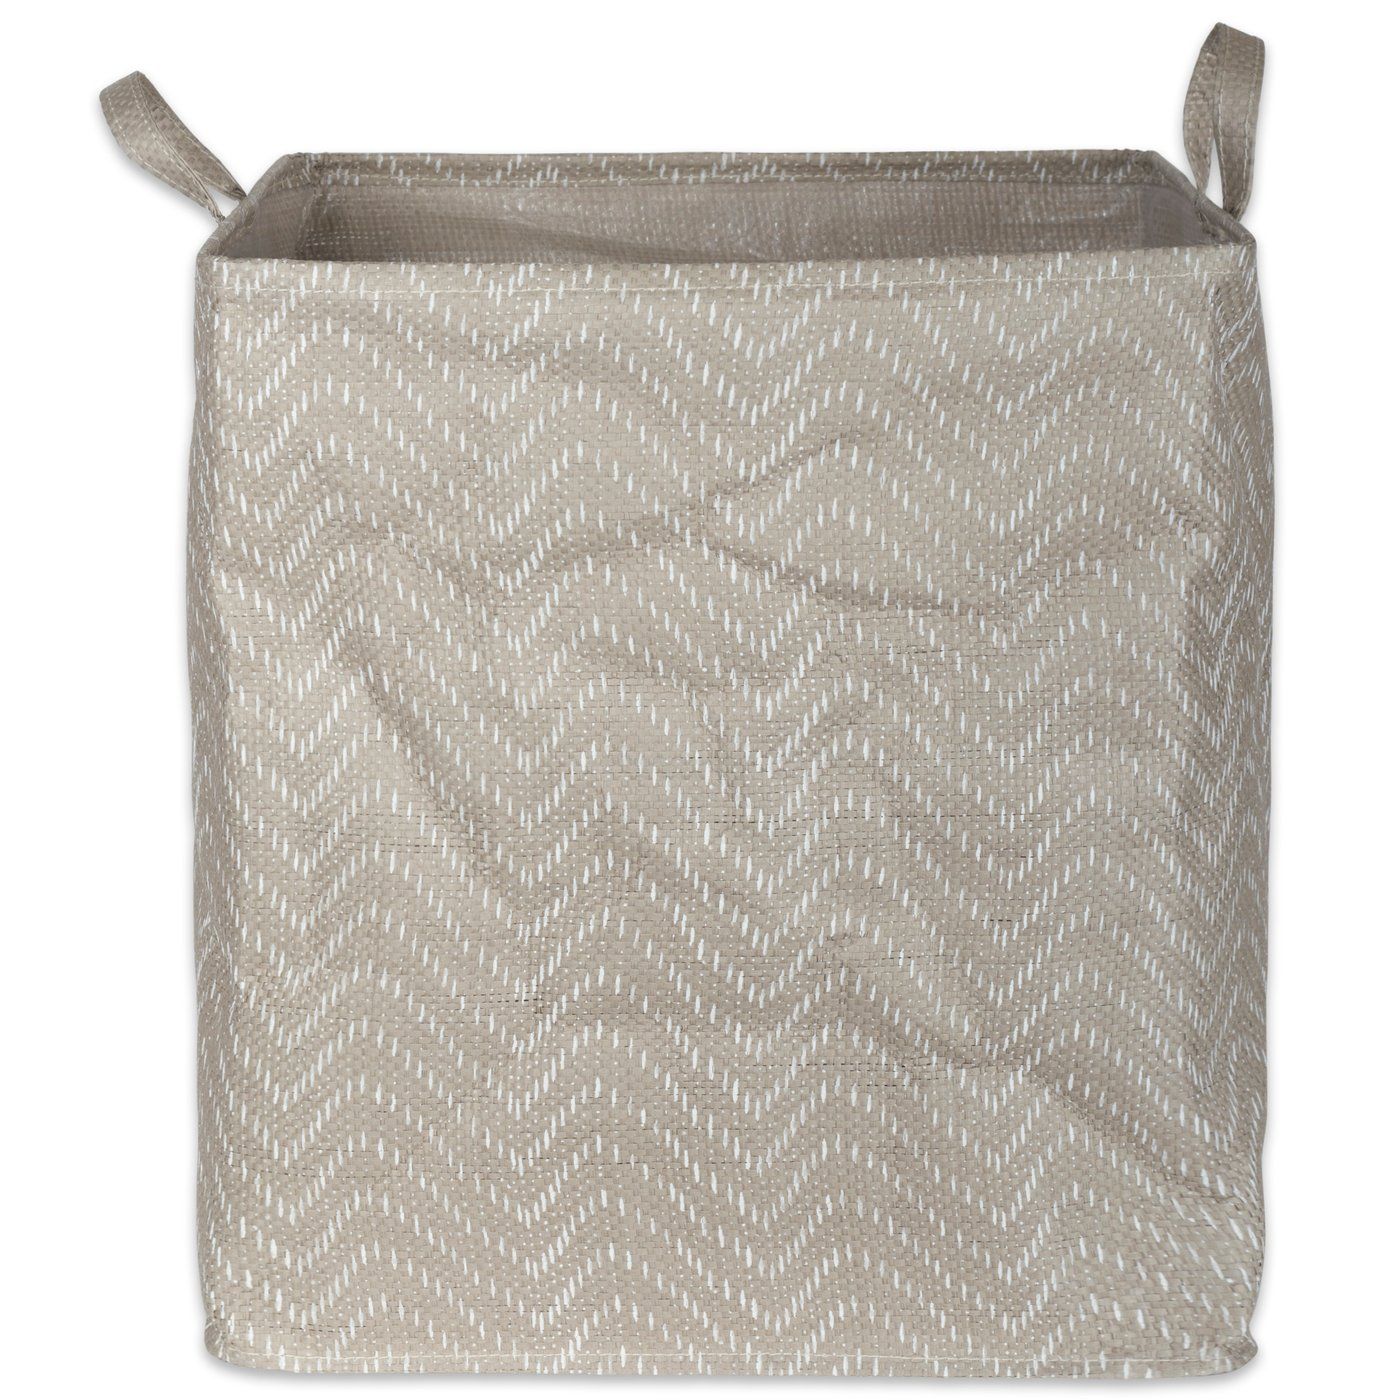 Pe Coated Woven Paper Laundry Hamper Tribal Chevron Stone/Cream Rectangular 16X16X19